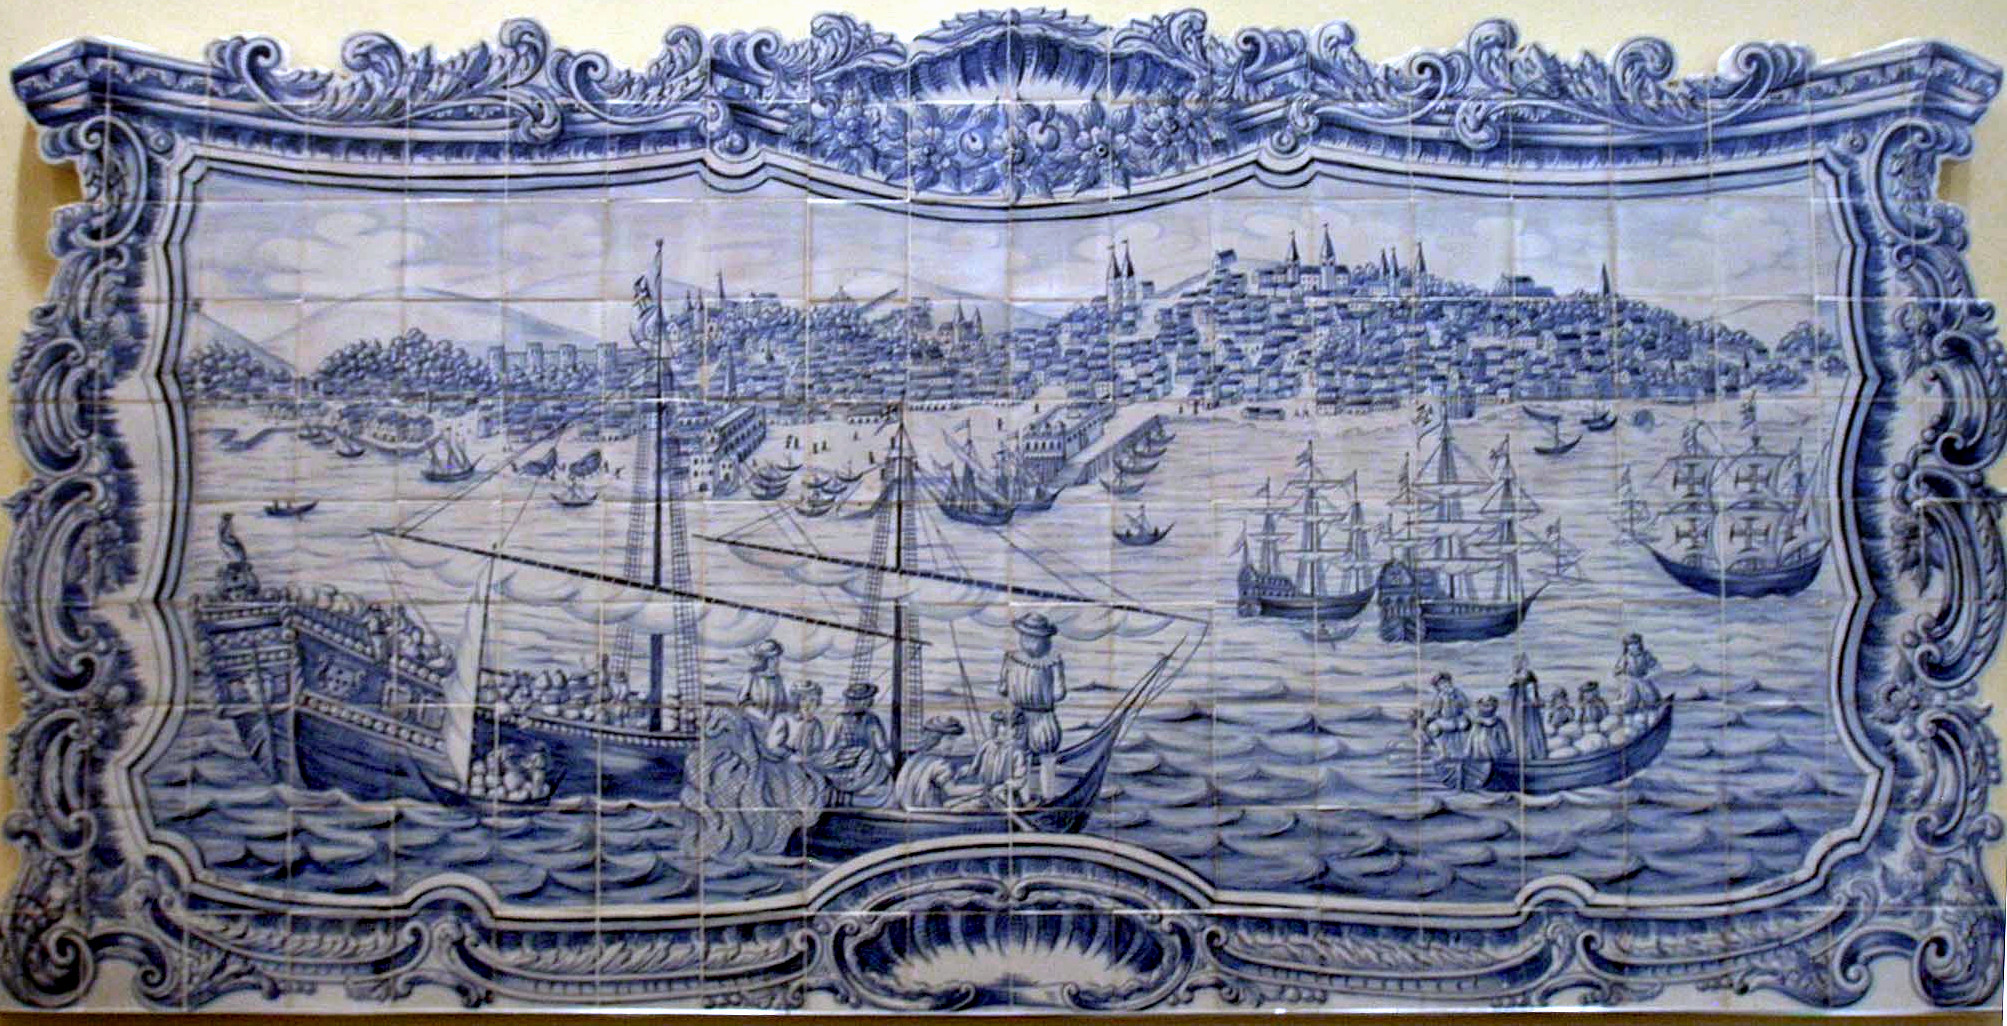 Lisboa - Seculo XVIII (Лиссабон — XVIII век), UNNY215G, 1996, Португалия  